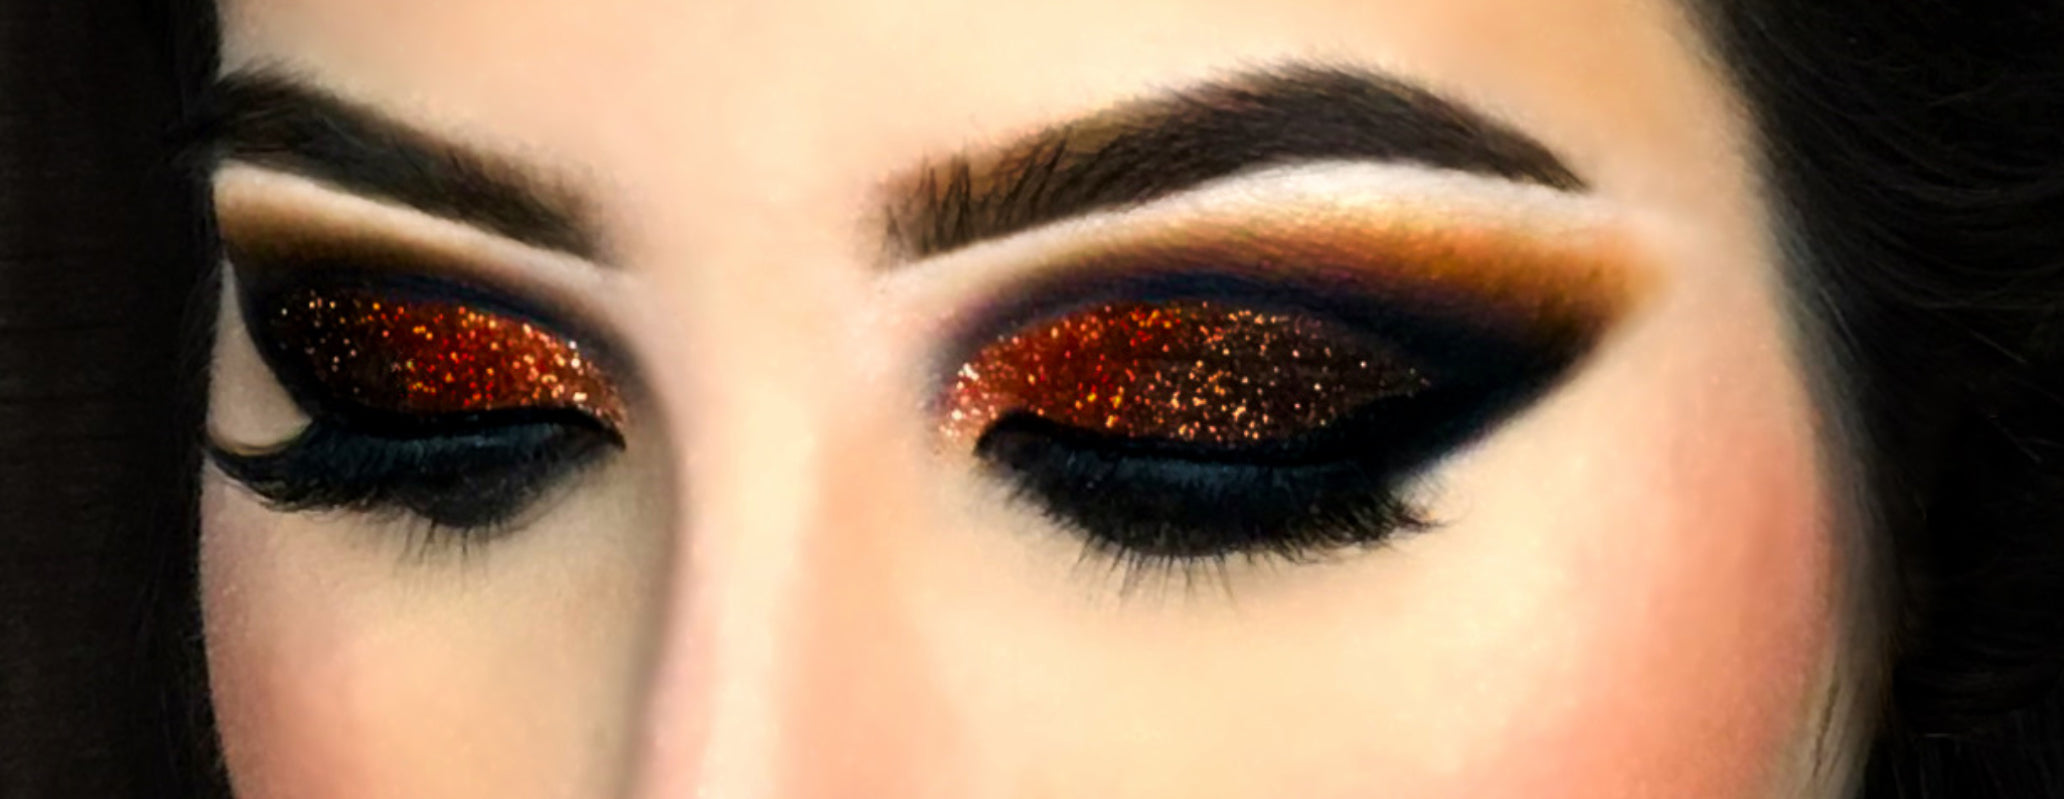 copper brown glitter eyeshadow on woman's eyes-starfire cosmetics